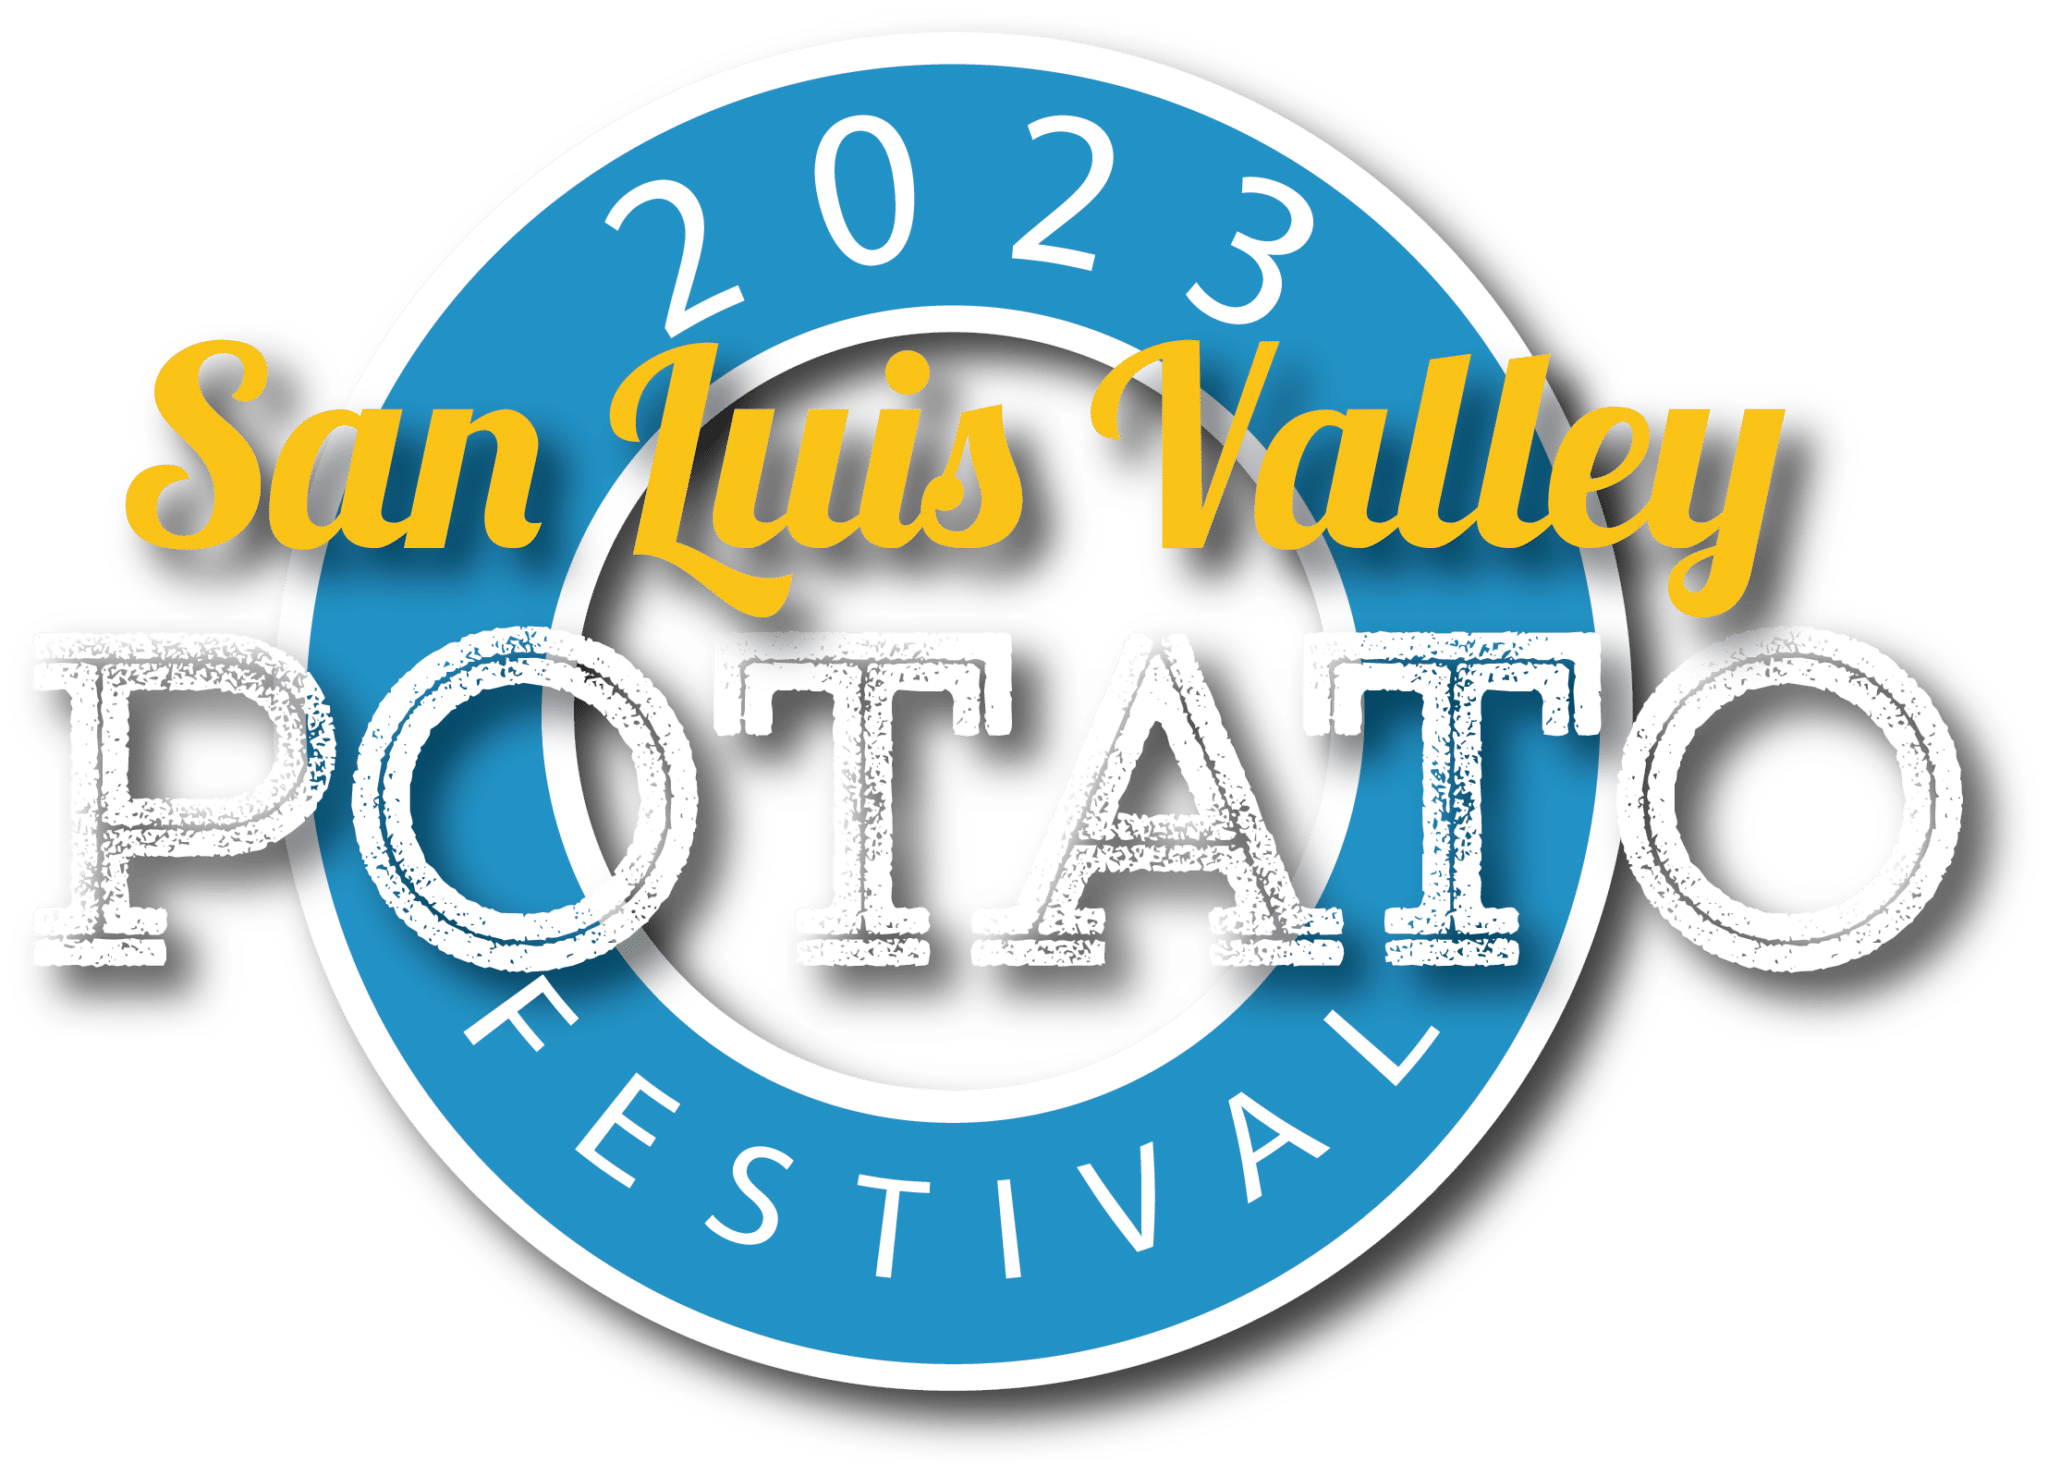 Potato Festival in San Luis Valley, Colorado